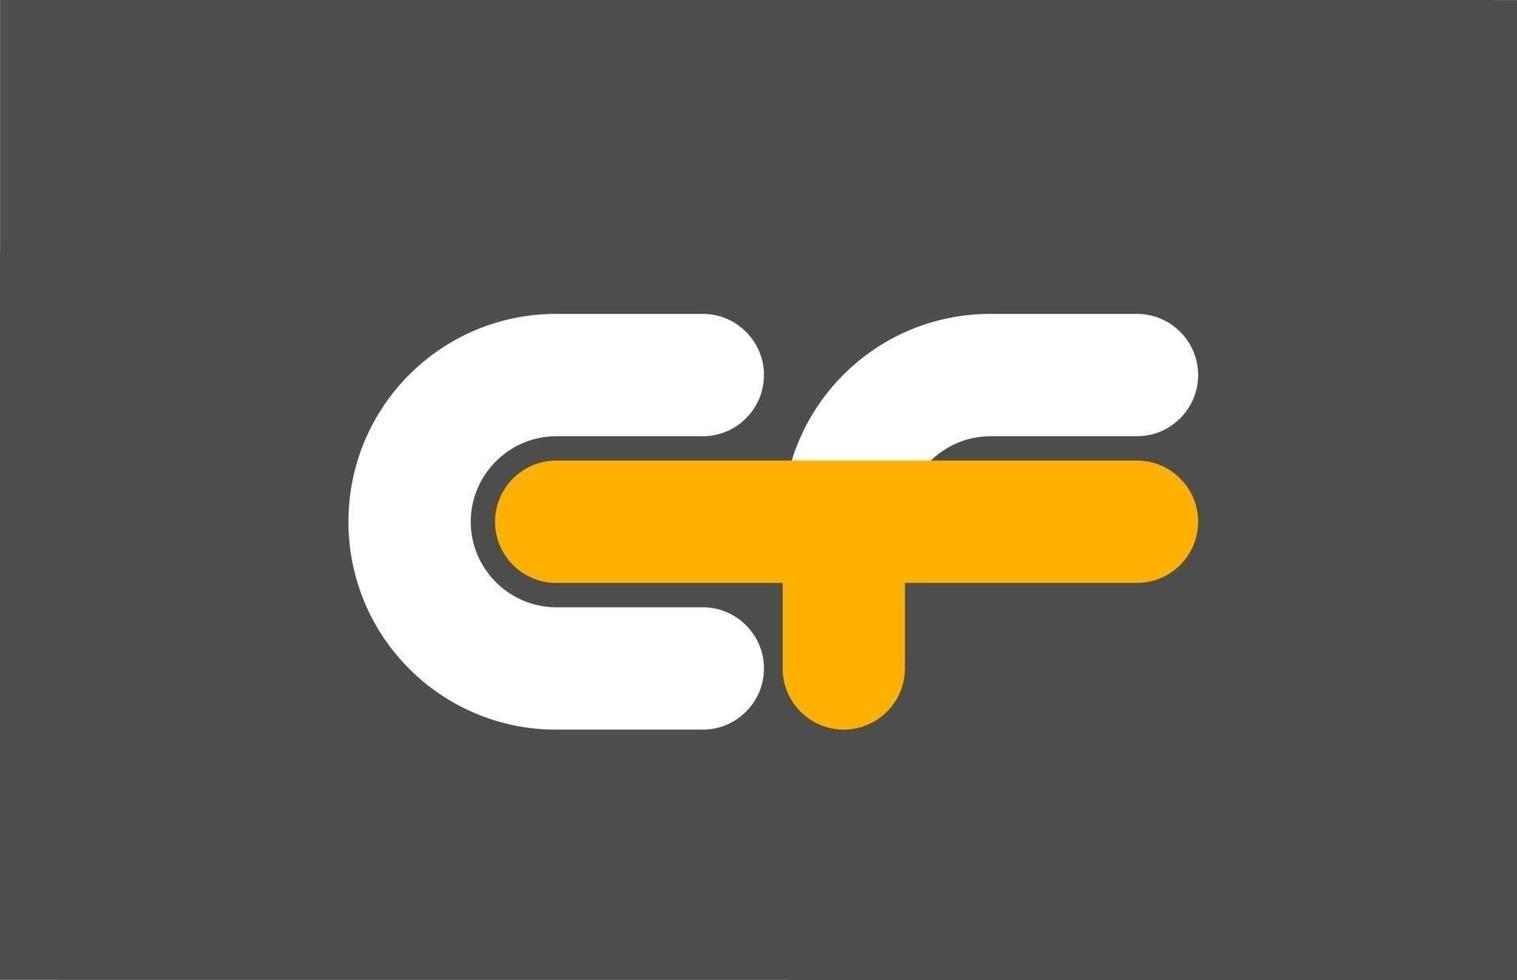 yellow white grey combination logo letter EF E F alphabet design icon vector